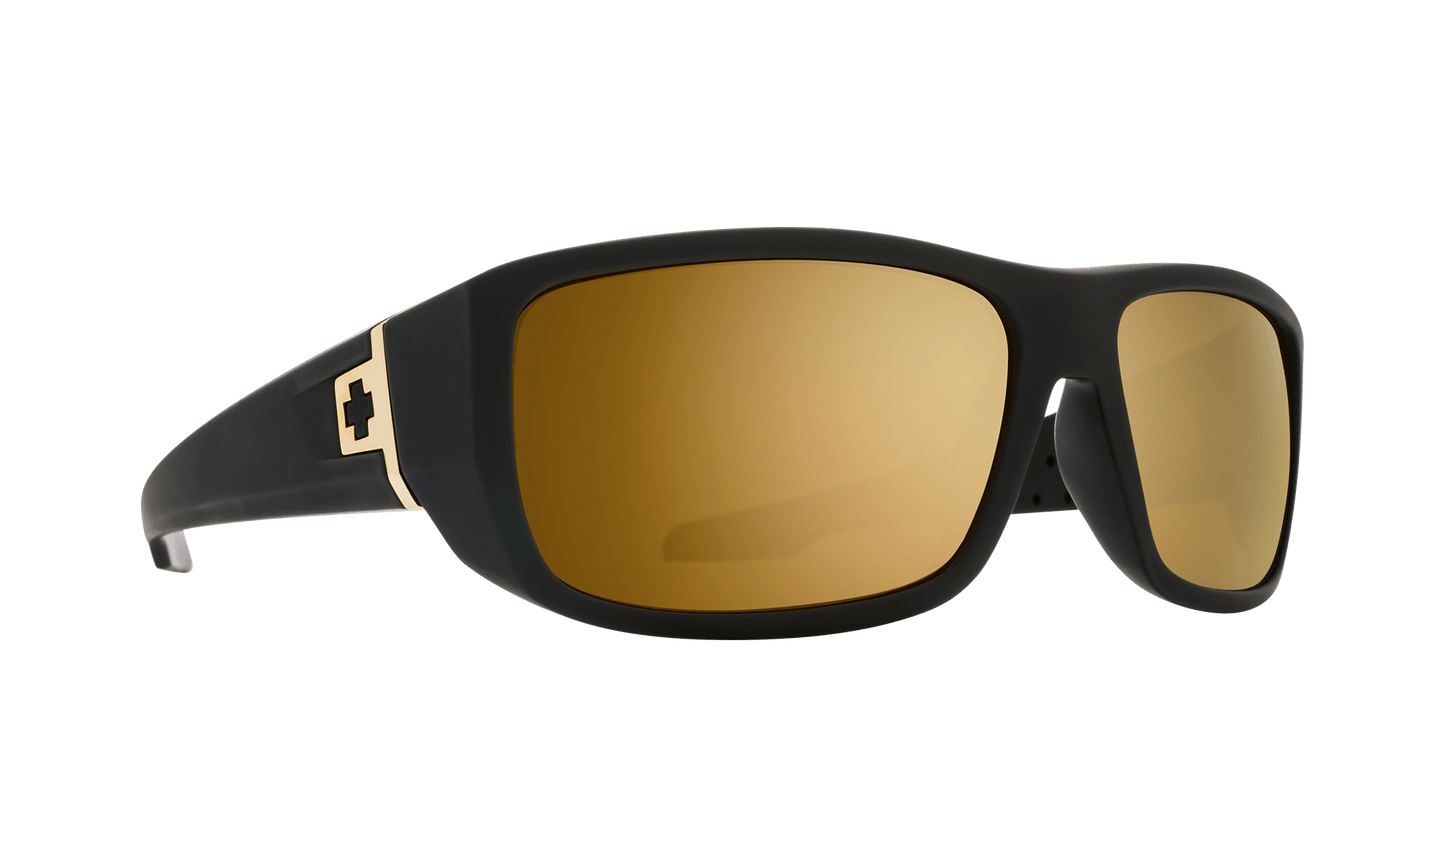 SPY MC3 Sunglasses  HD Plus Bronze with Gold Spectra Mirror 25th Anniversary Matte Black Gold  63-15-122